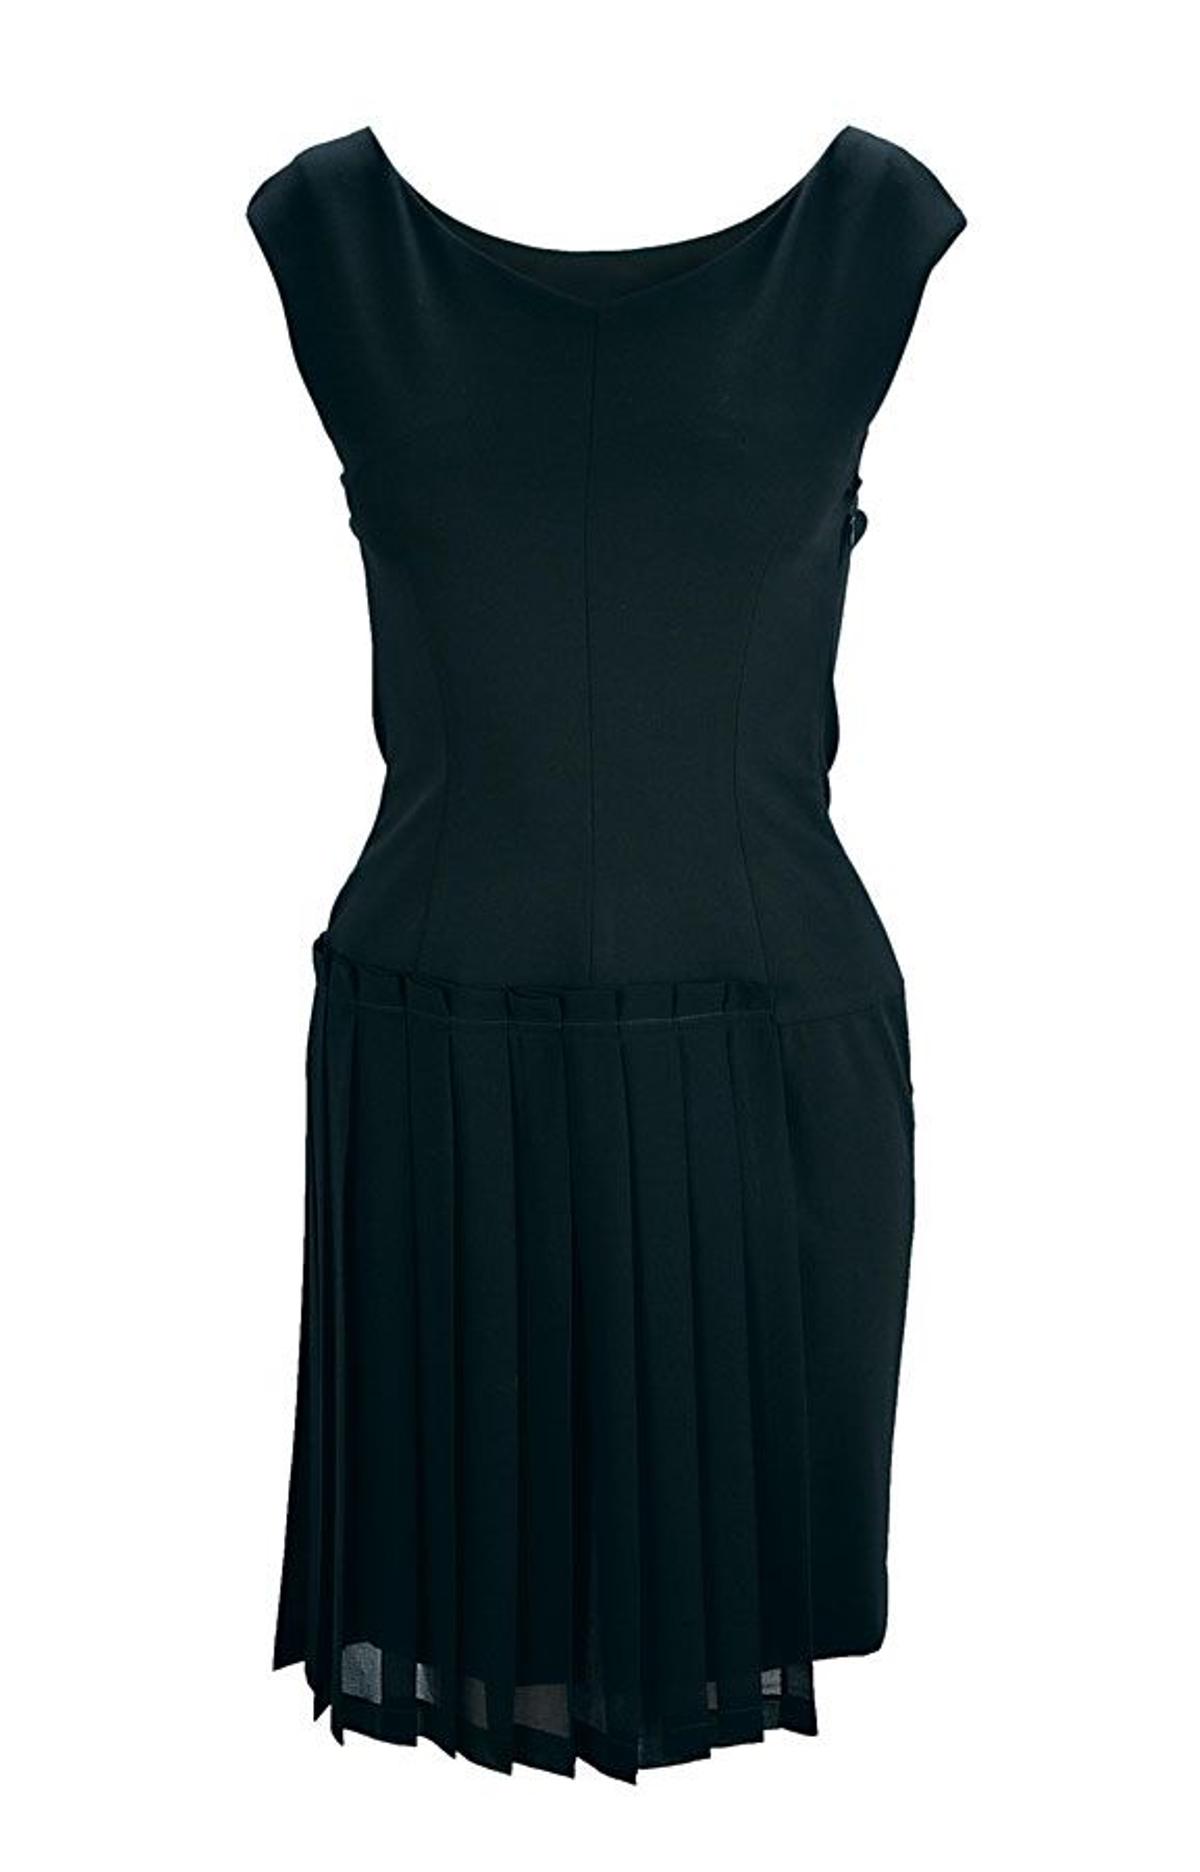 Little black dress: Denny Rose